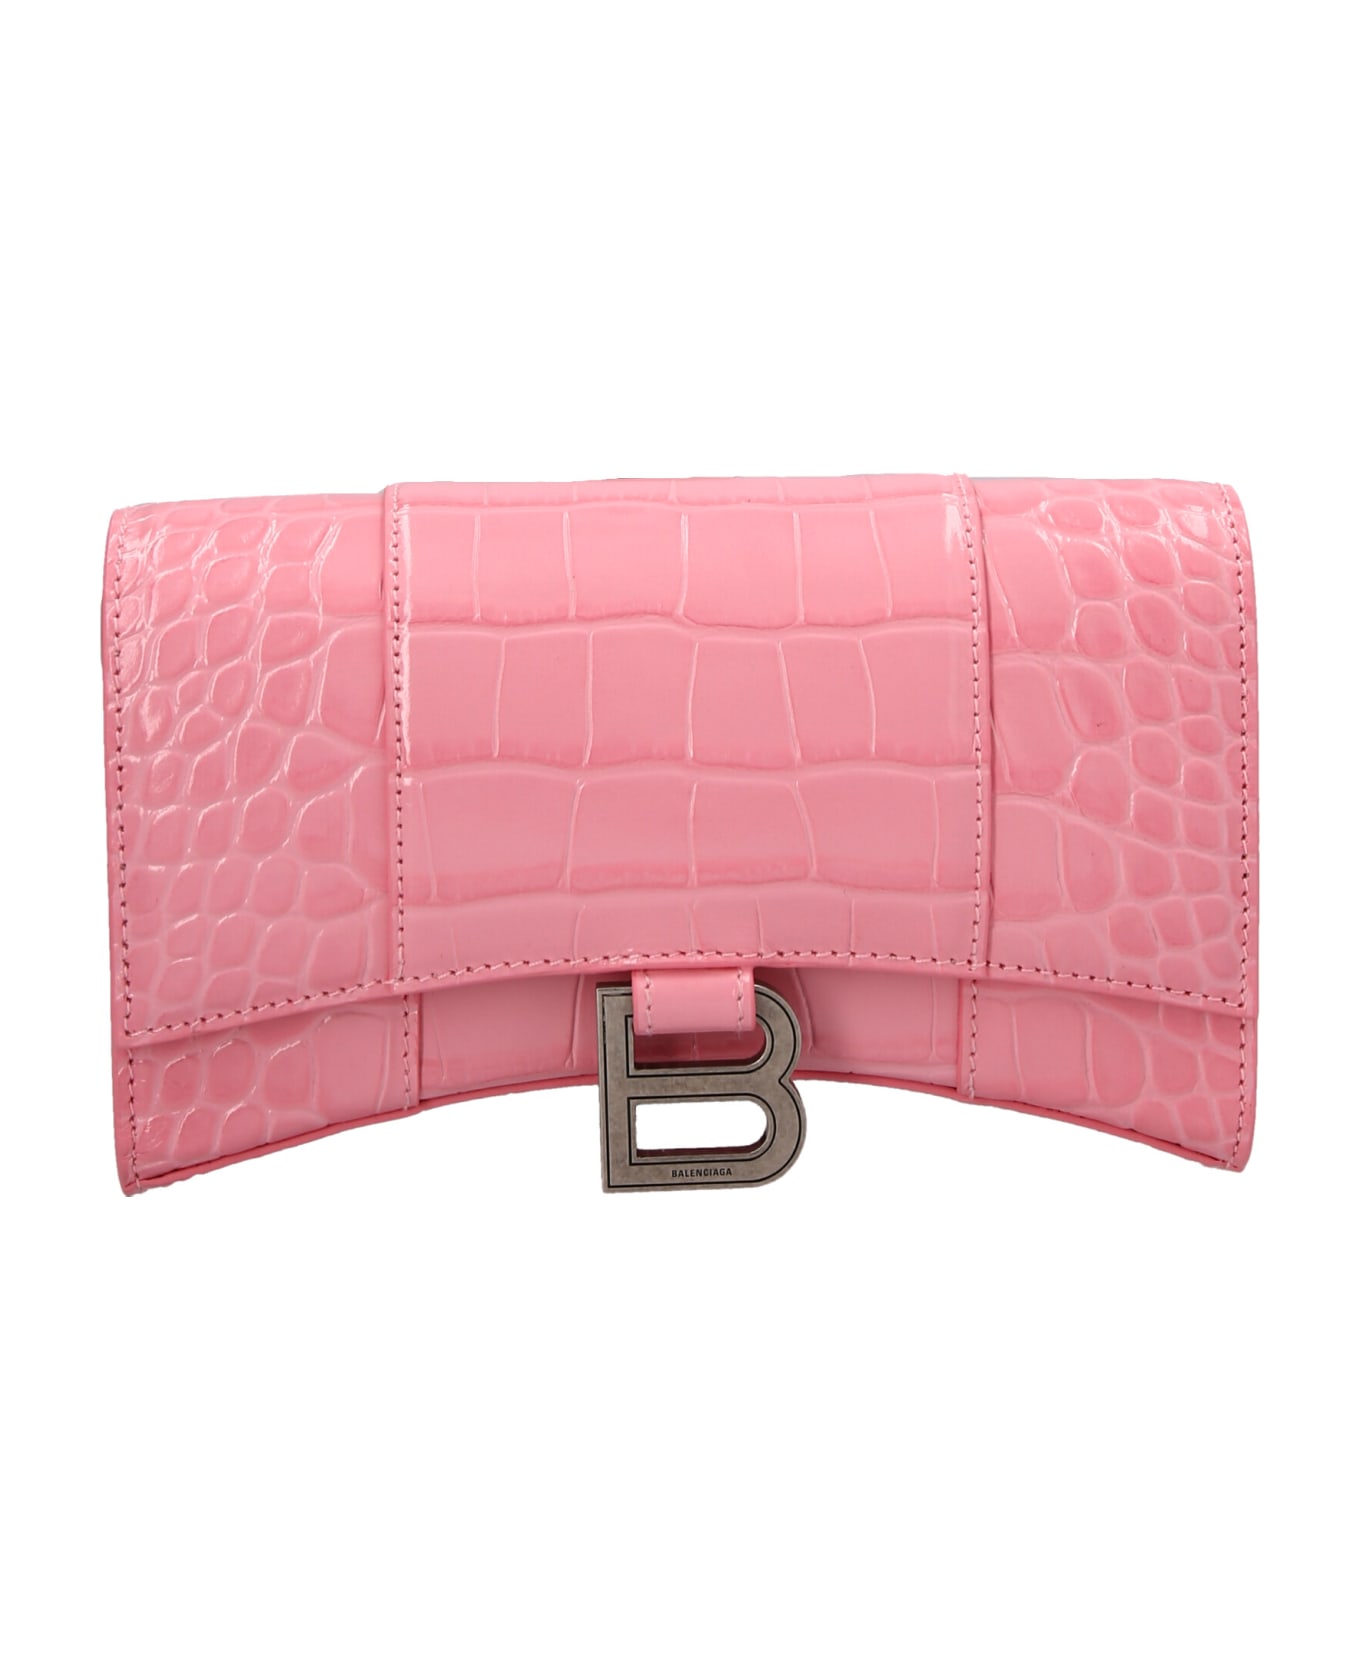 Balenciaga Hourglass Wallet - Pink